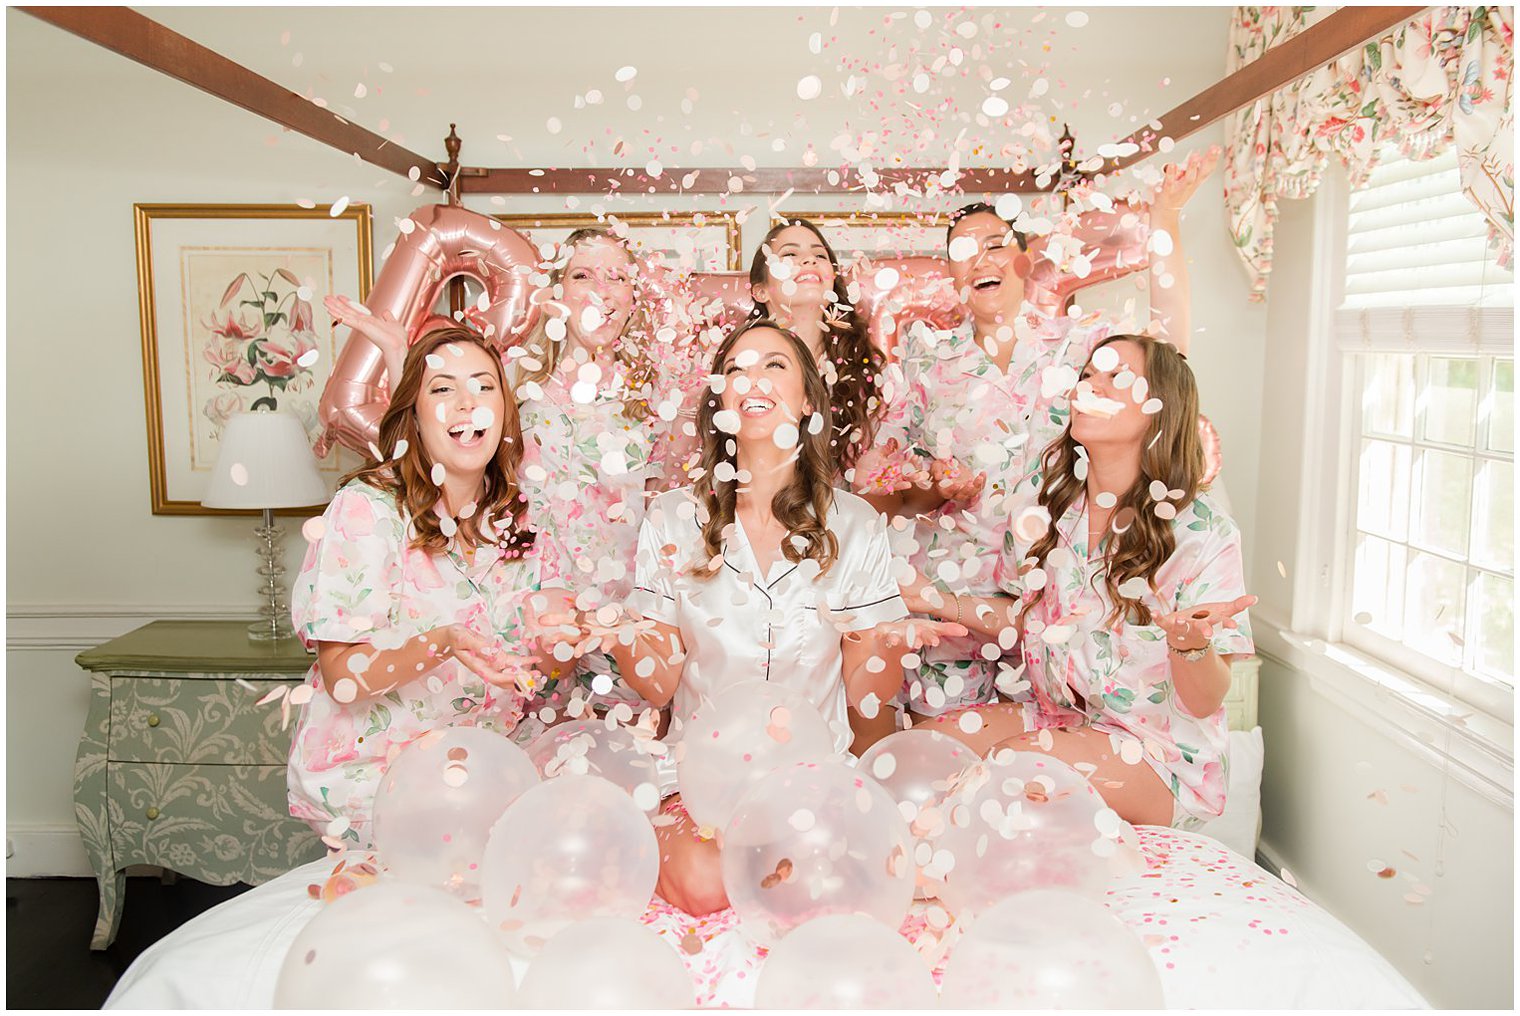 bride and bridesmaids toss confetti during wedding prep photos